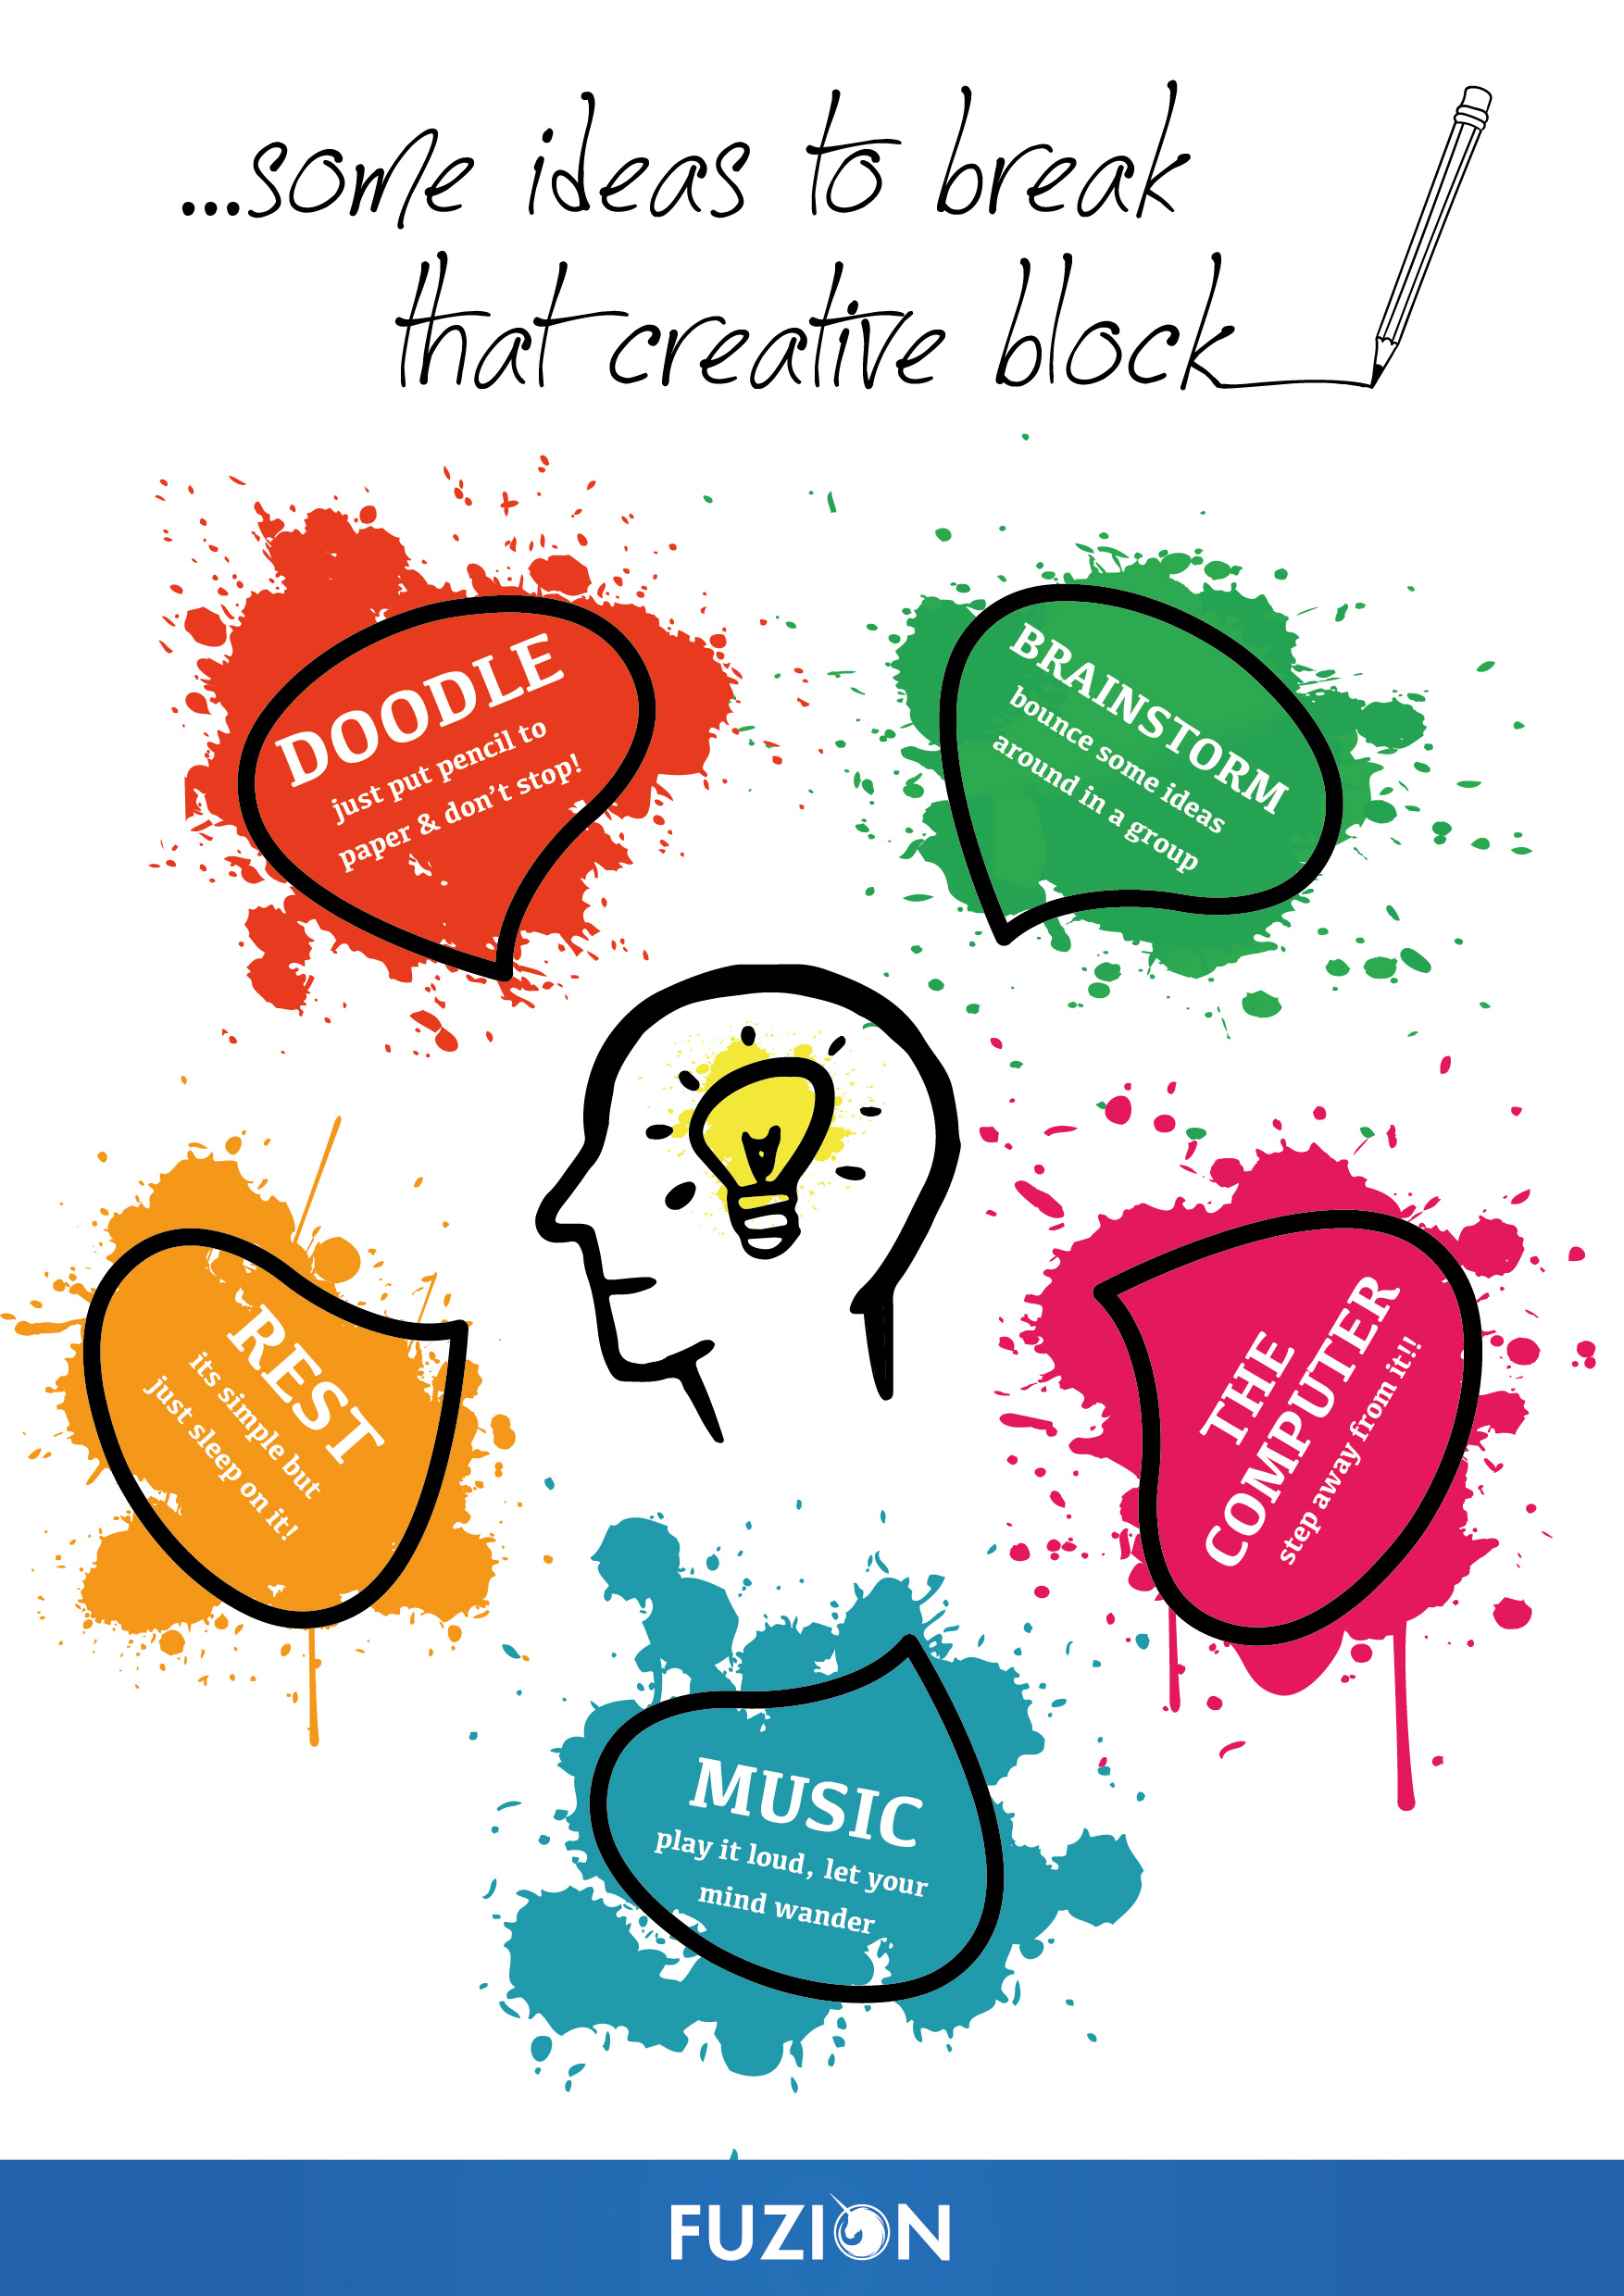 Fuzion - Creative block infographic